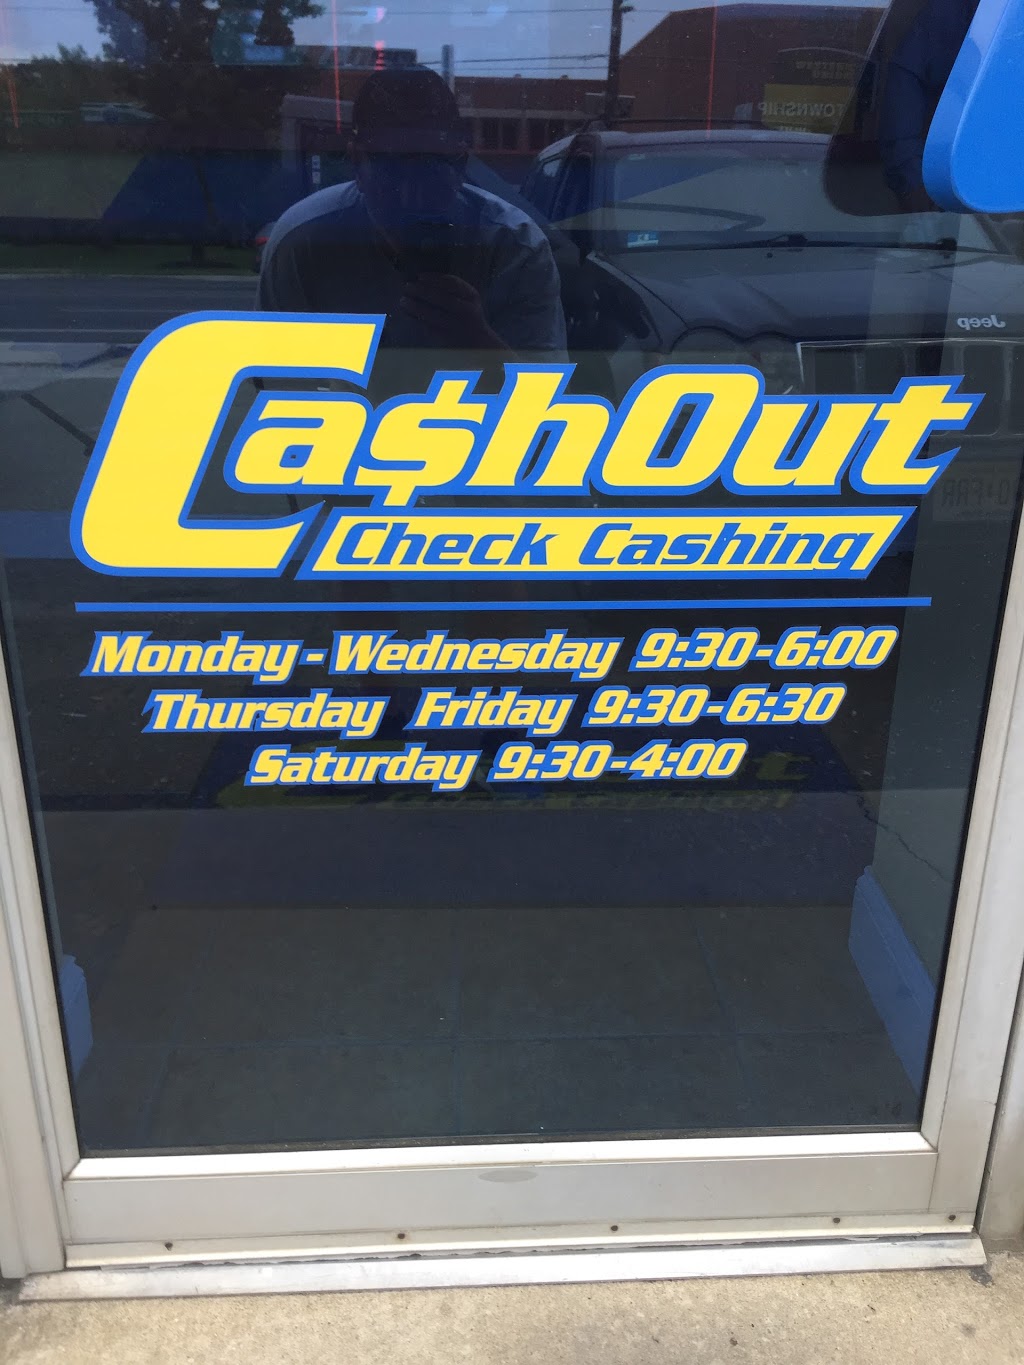 Cash Out Check Cashing | 1020 Cooper St # 2, Deptford, NJ 08096 | Phone: (856) 251-3365